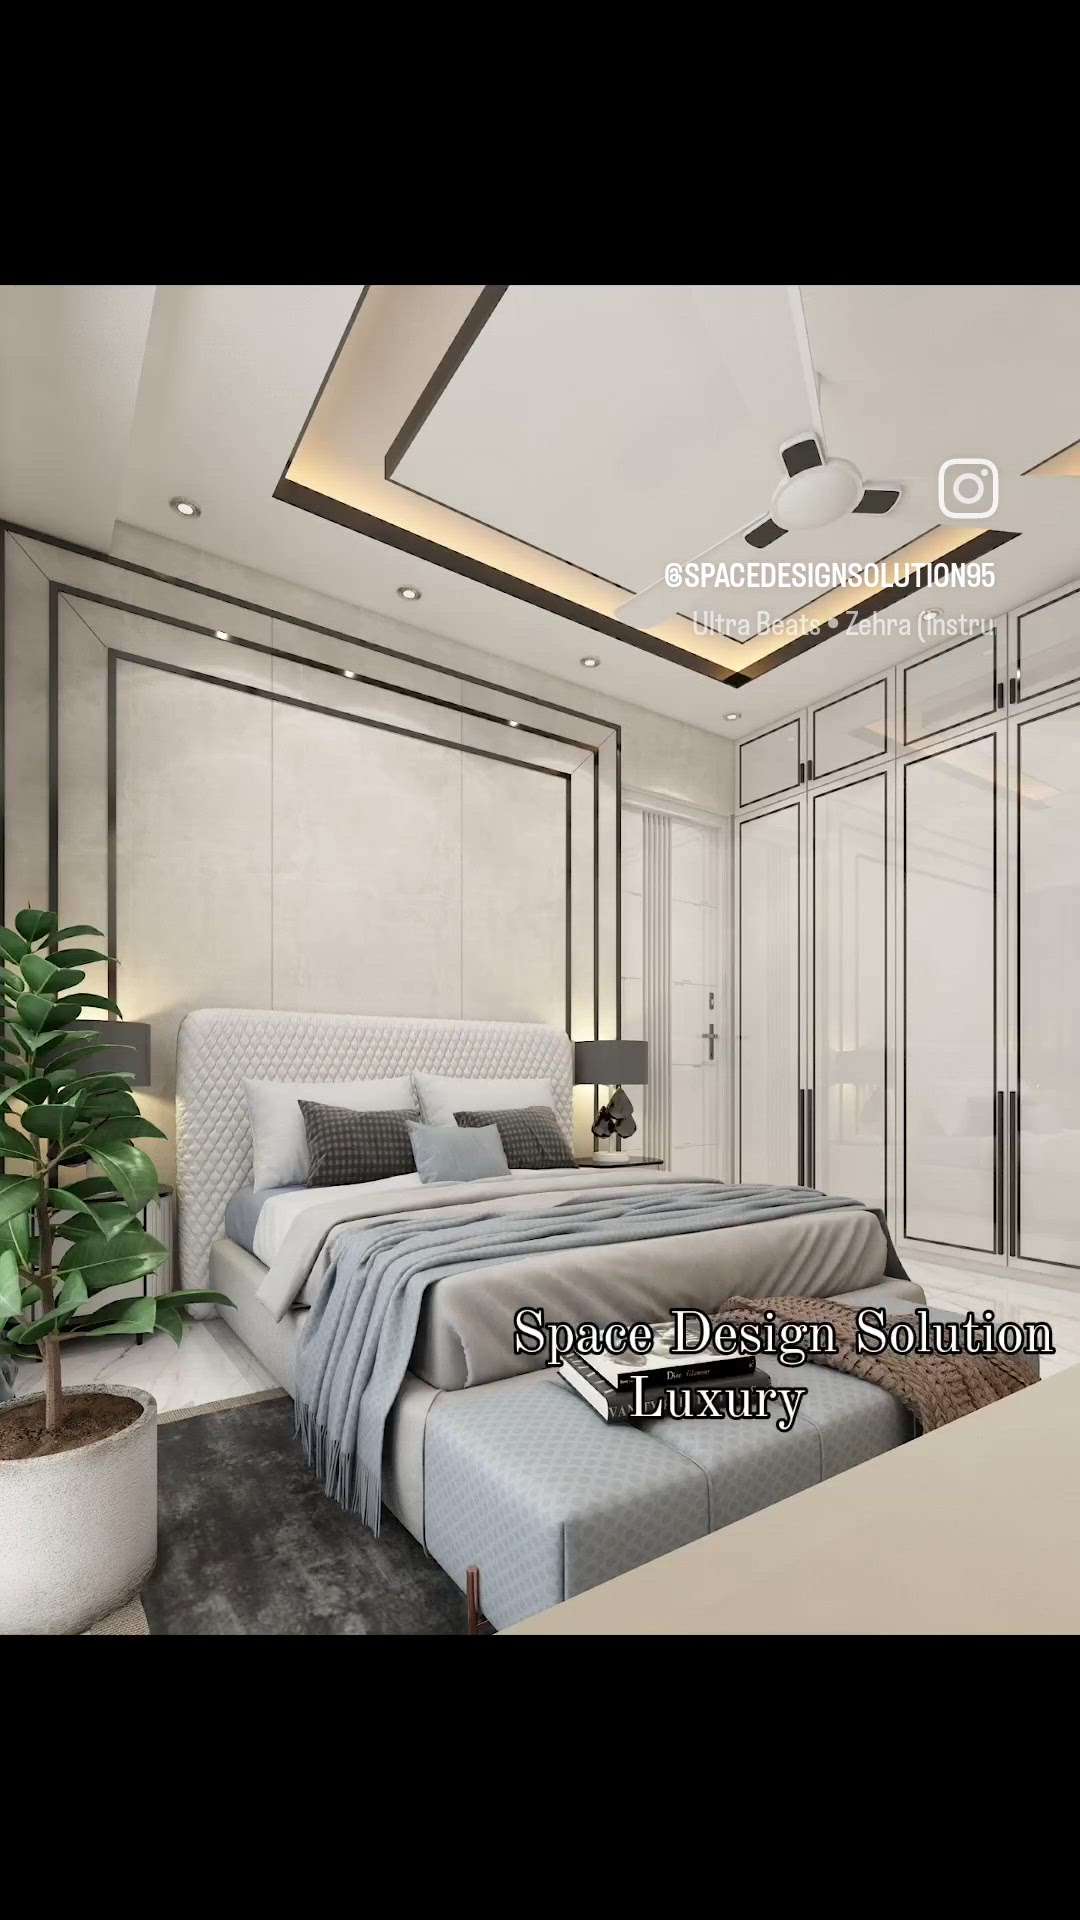 #luxuryinterior  #luxurymasterbedroom#luxurylifestyle#
#Space#design#Solution #
Ph.9634057373
www.spacedesignsolution.com